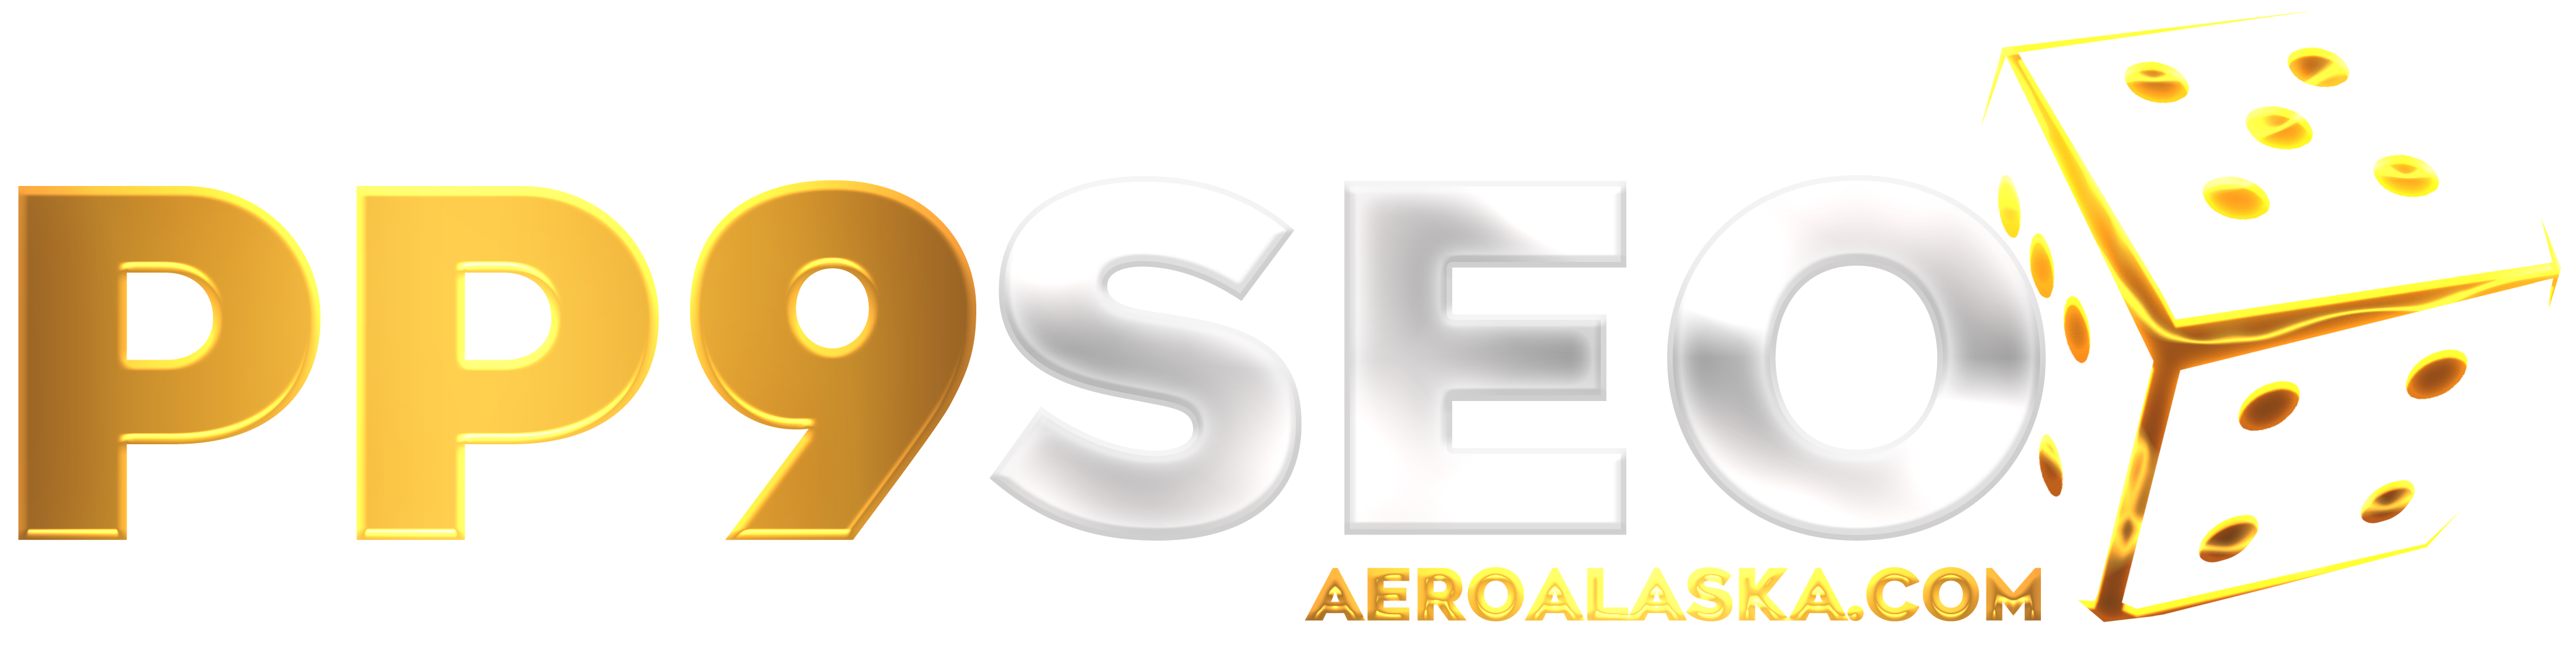 PP9SEO site logo